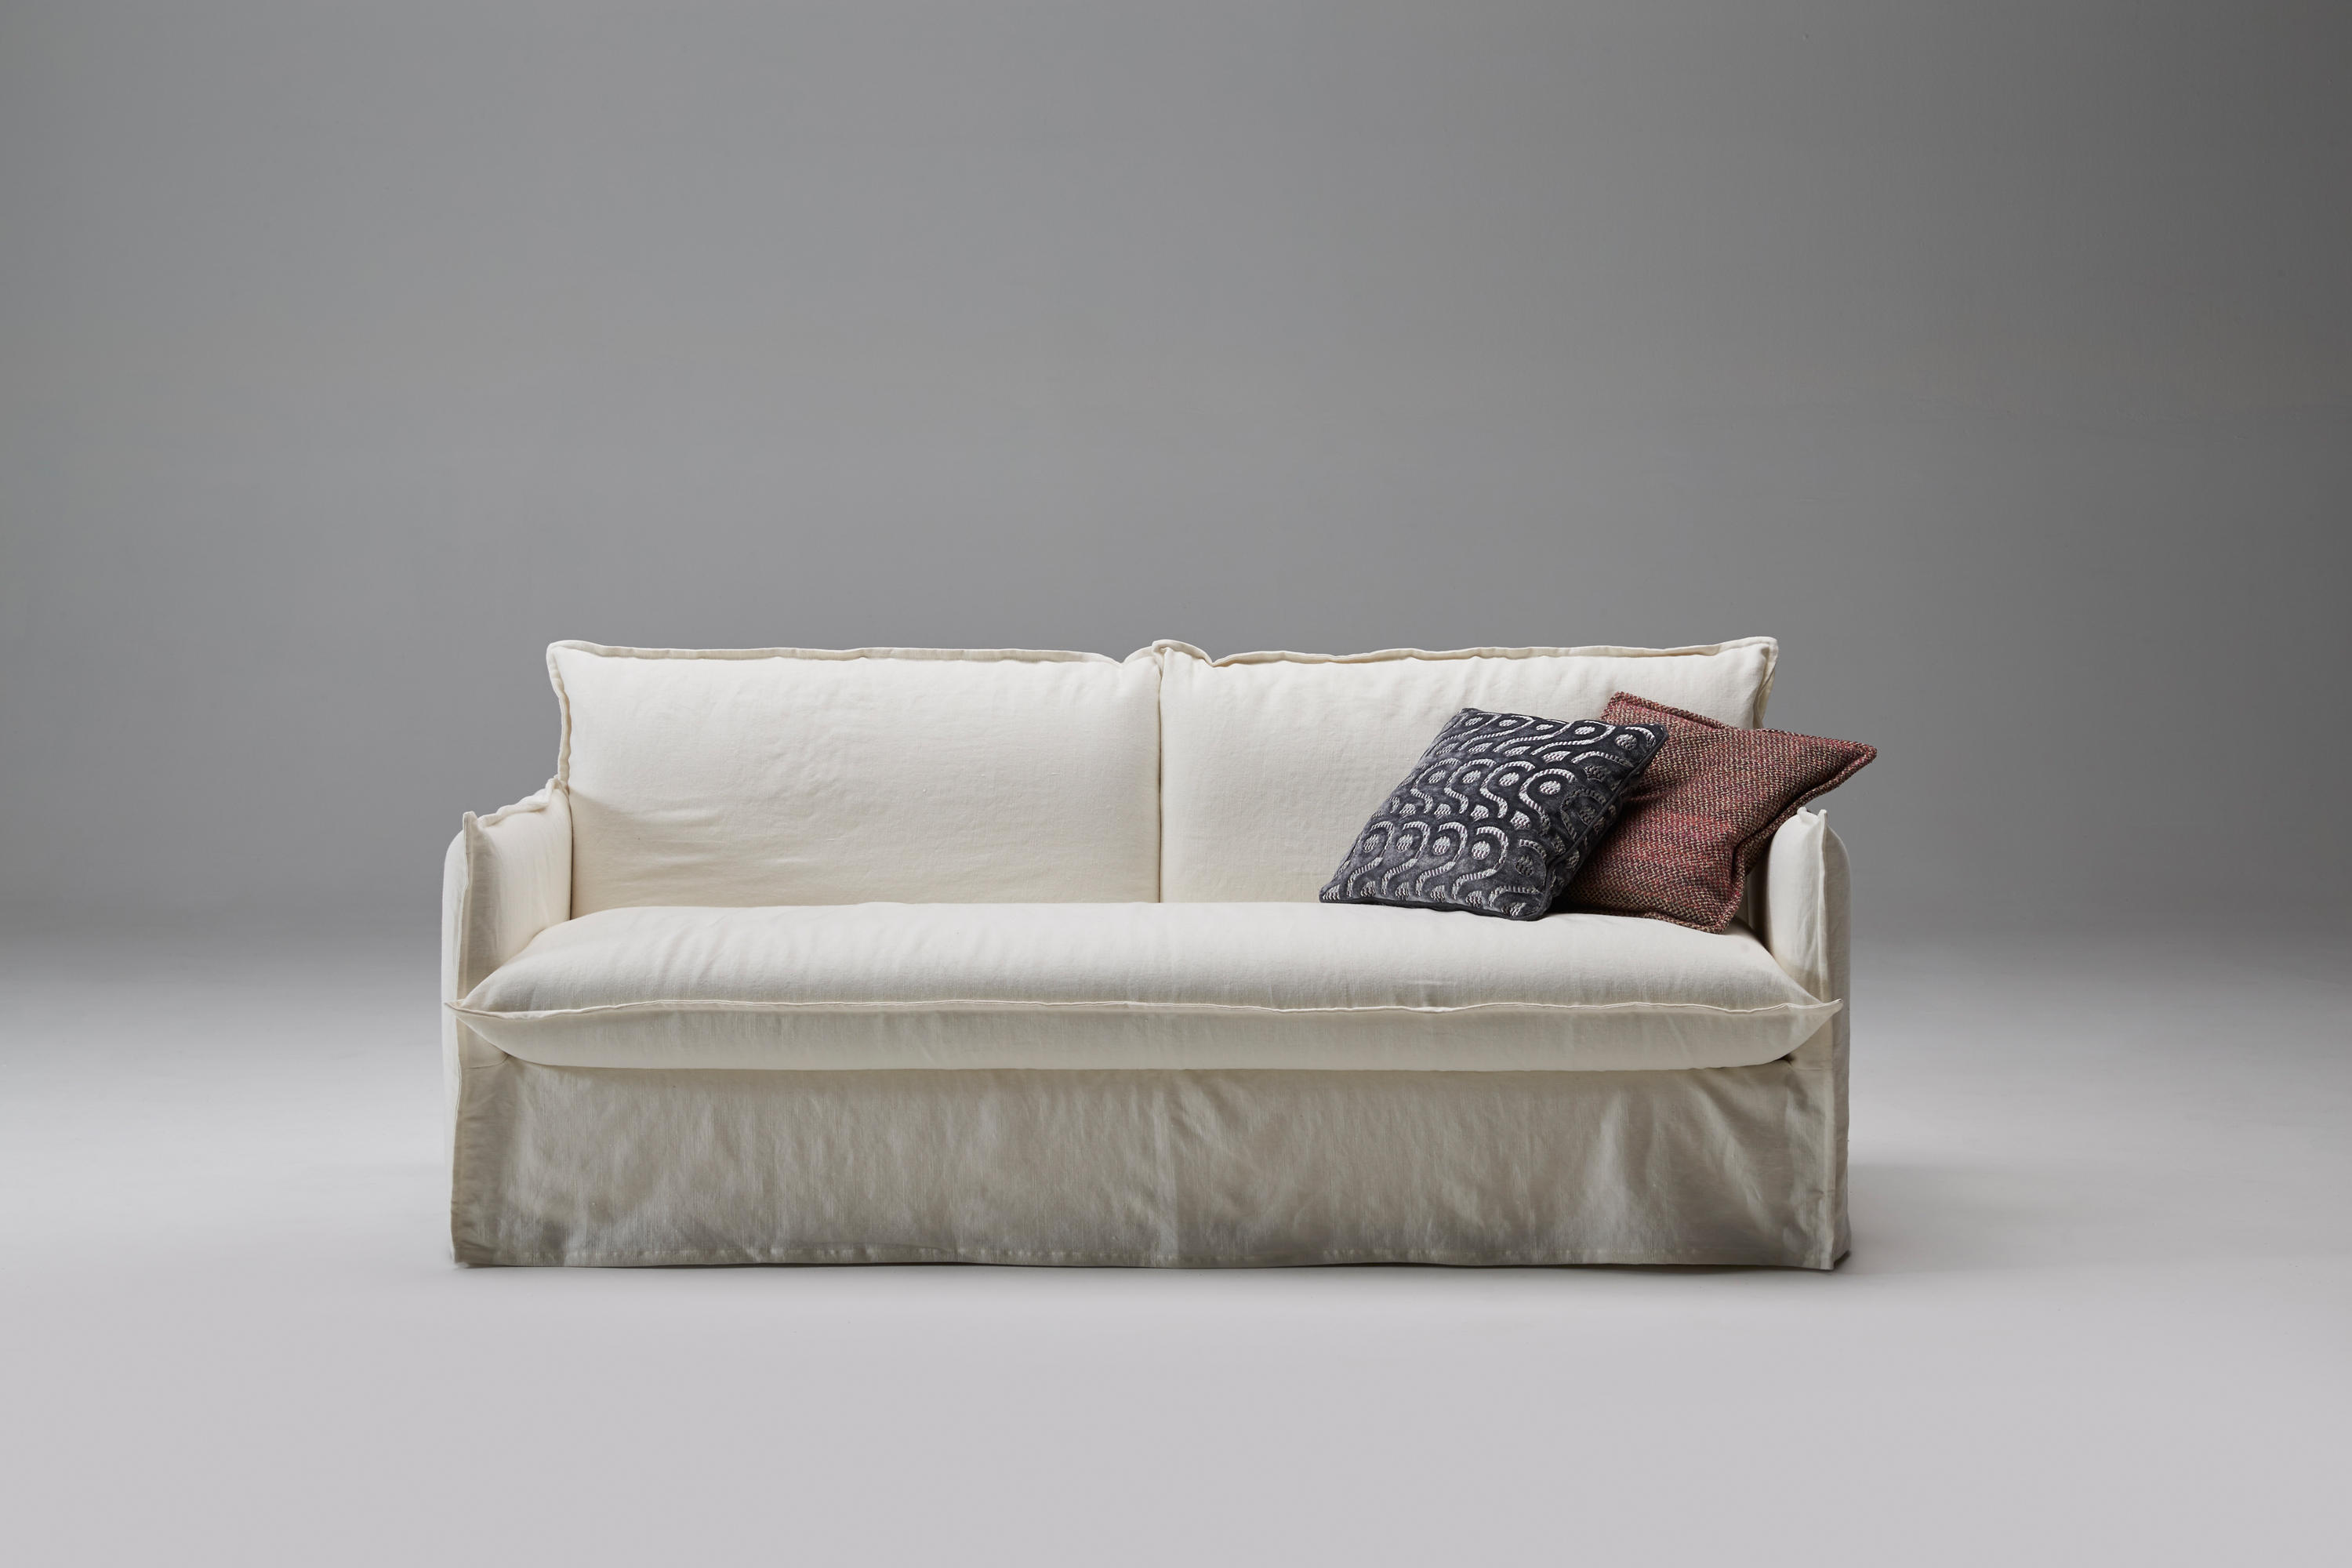 milano bedding clarke 14 three seater sofa bed